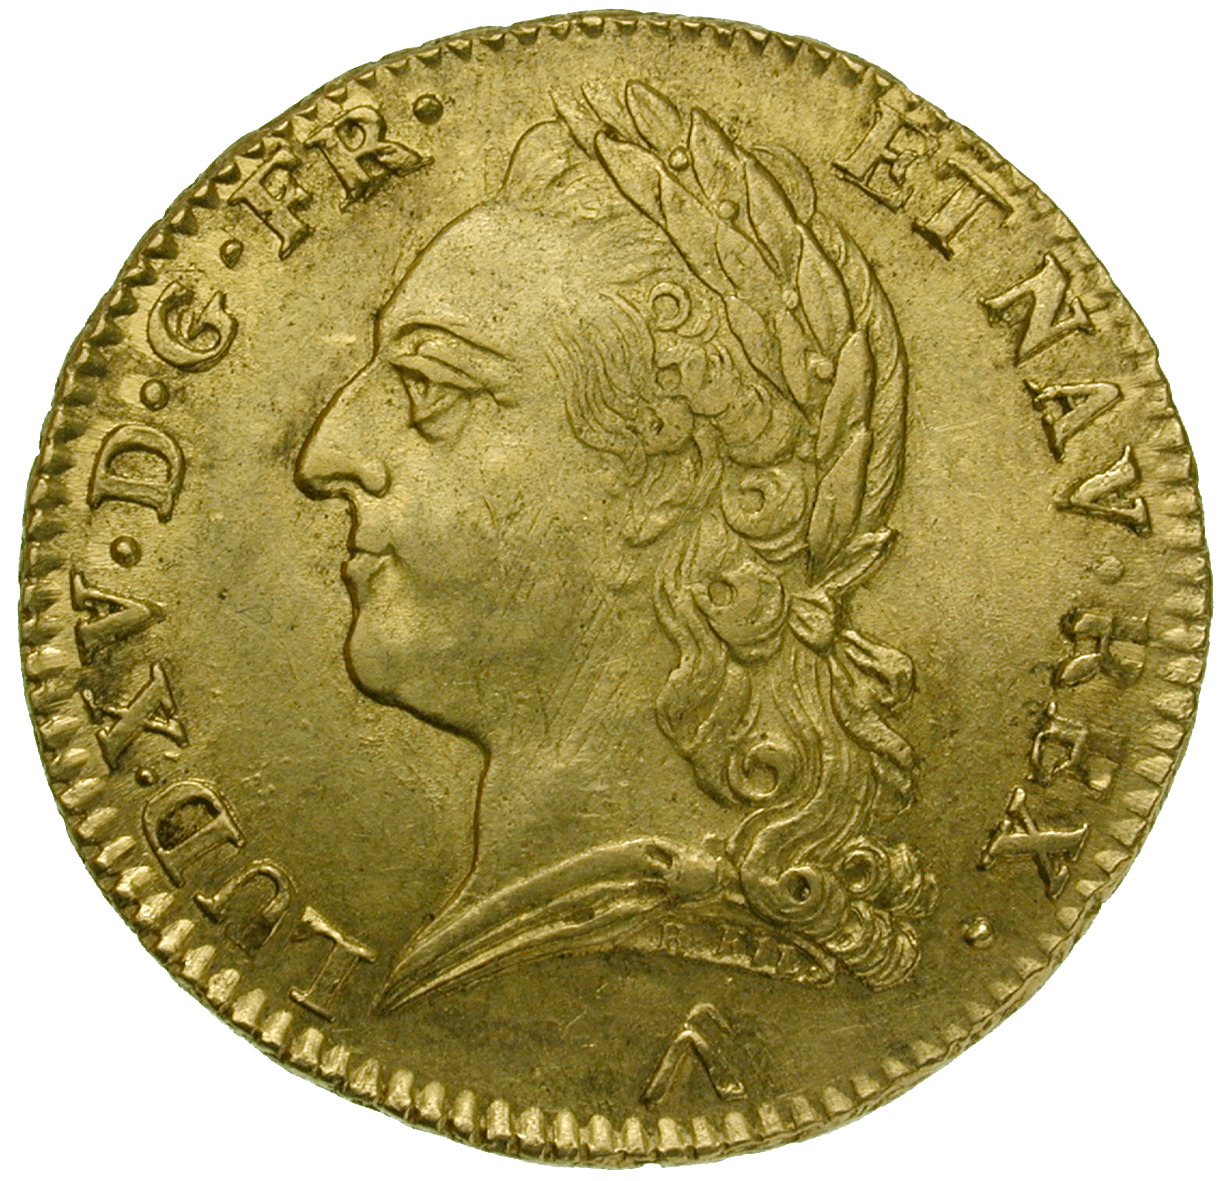 Königreich Frankreich, Ludwig XV., Doppelter Louis d'or 1772 (obverse)